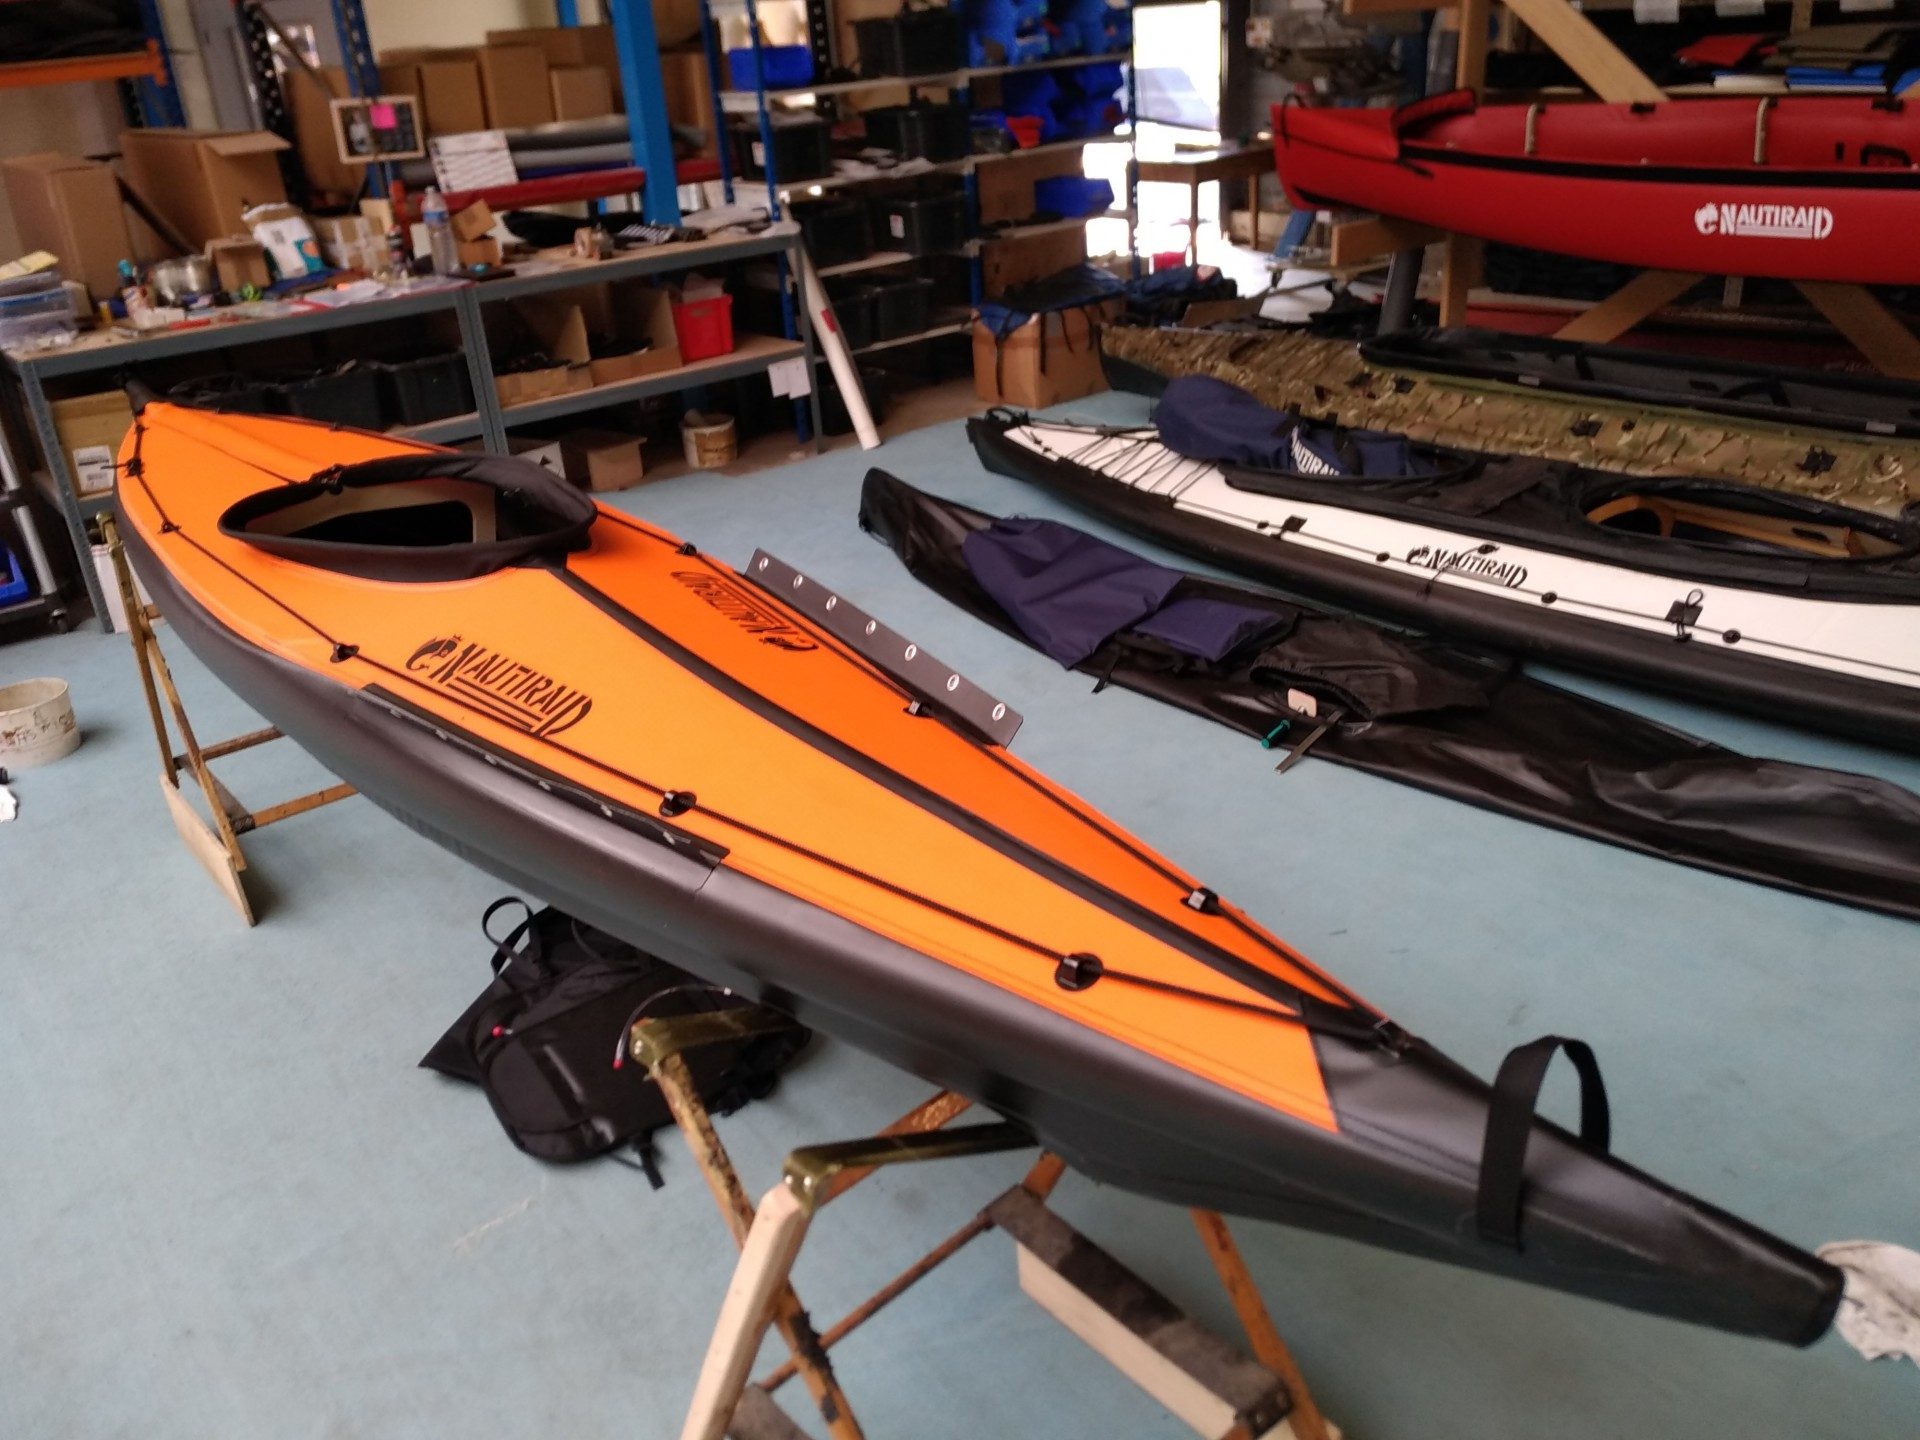 Kayaks pliants Nautiraid : nouveau coloris orange